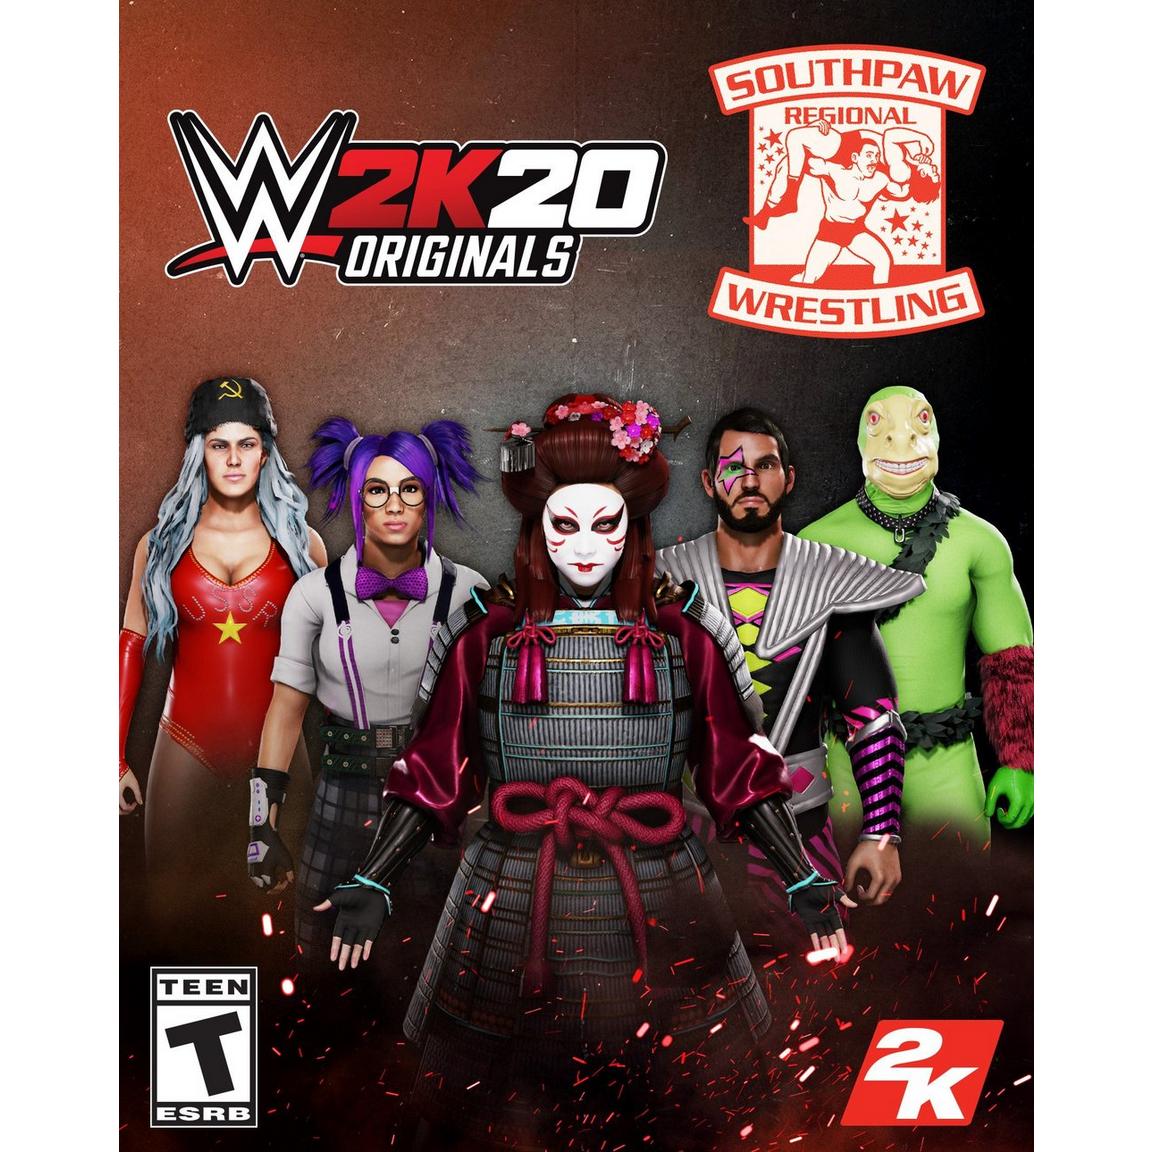 WWE 2K20 Originals: Southpaw Regional Wrestling DLC - PC, Digital